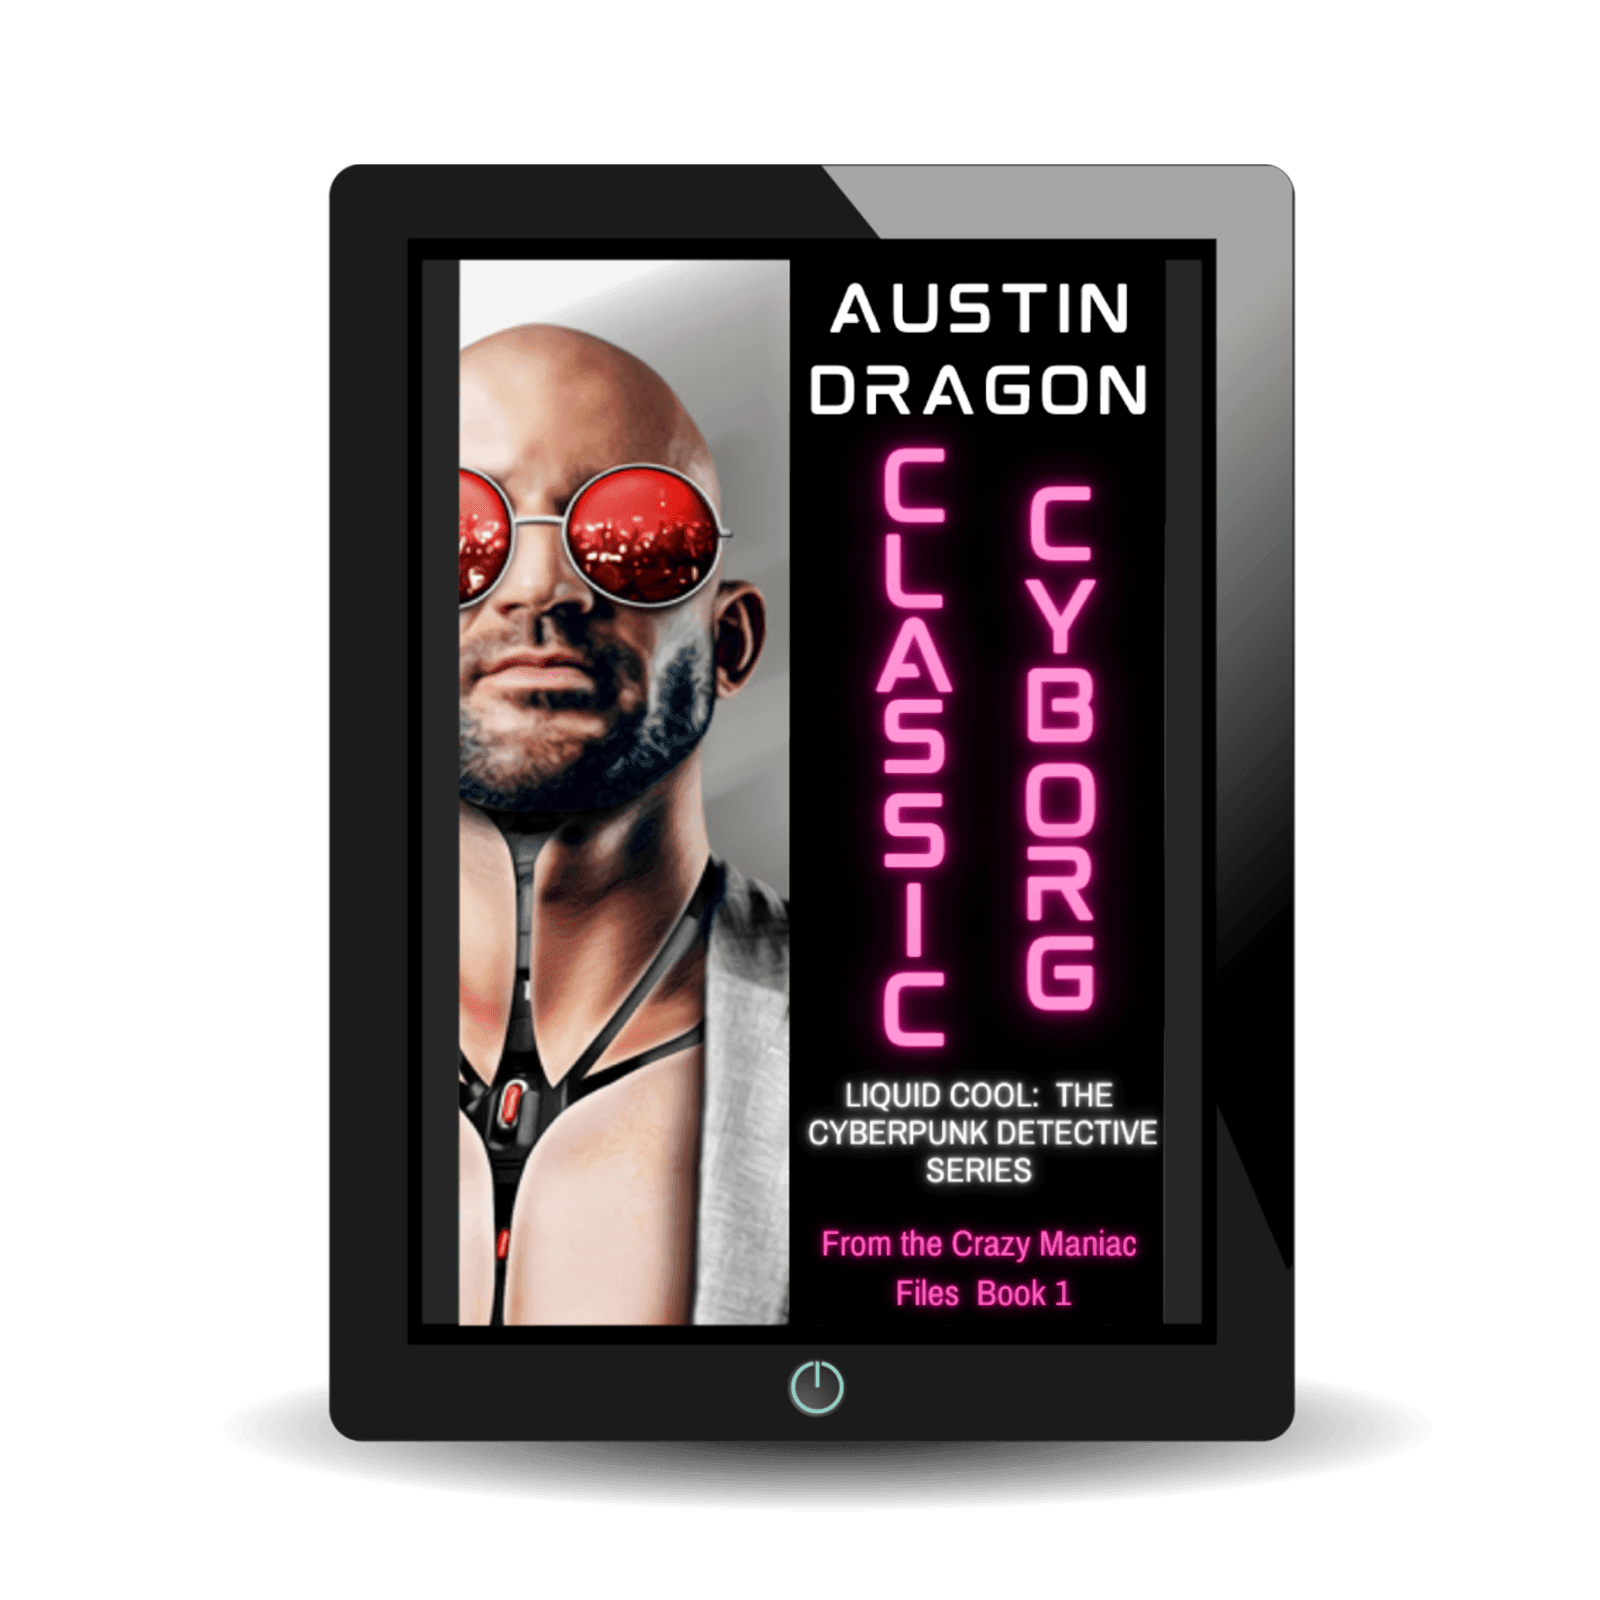 Classic Cyborg: Liquid Cool: The Cyberpunk Detective Series (From the Crazy Maniac Files Book 1) Ebook